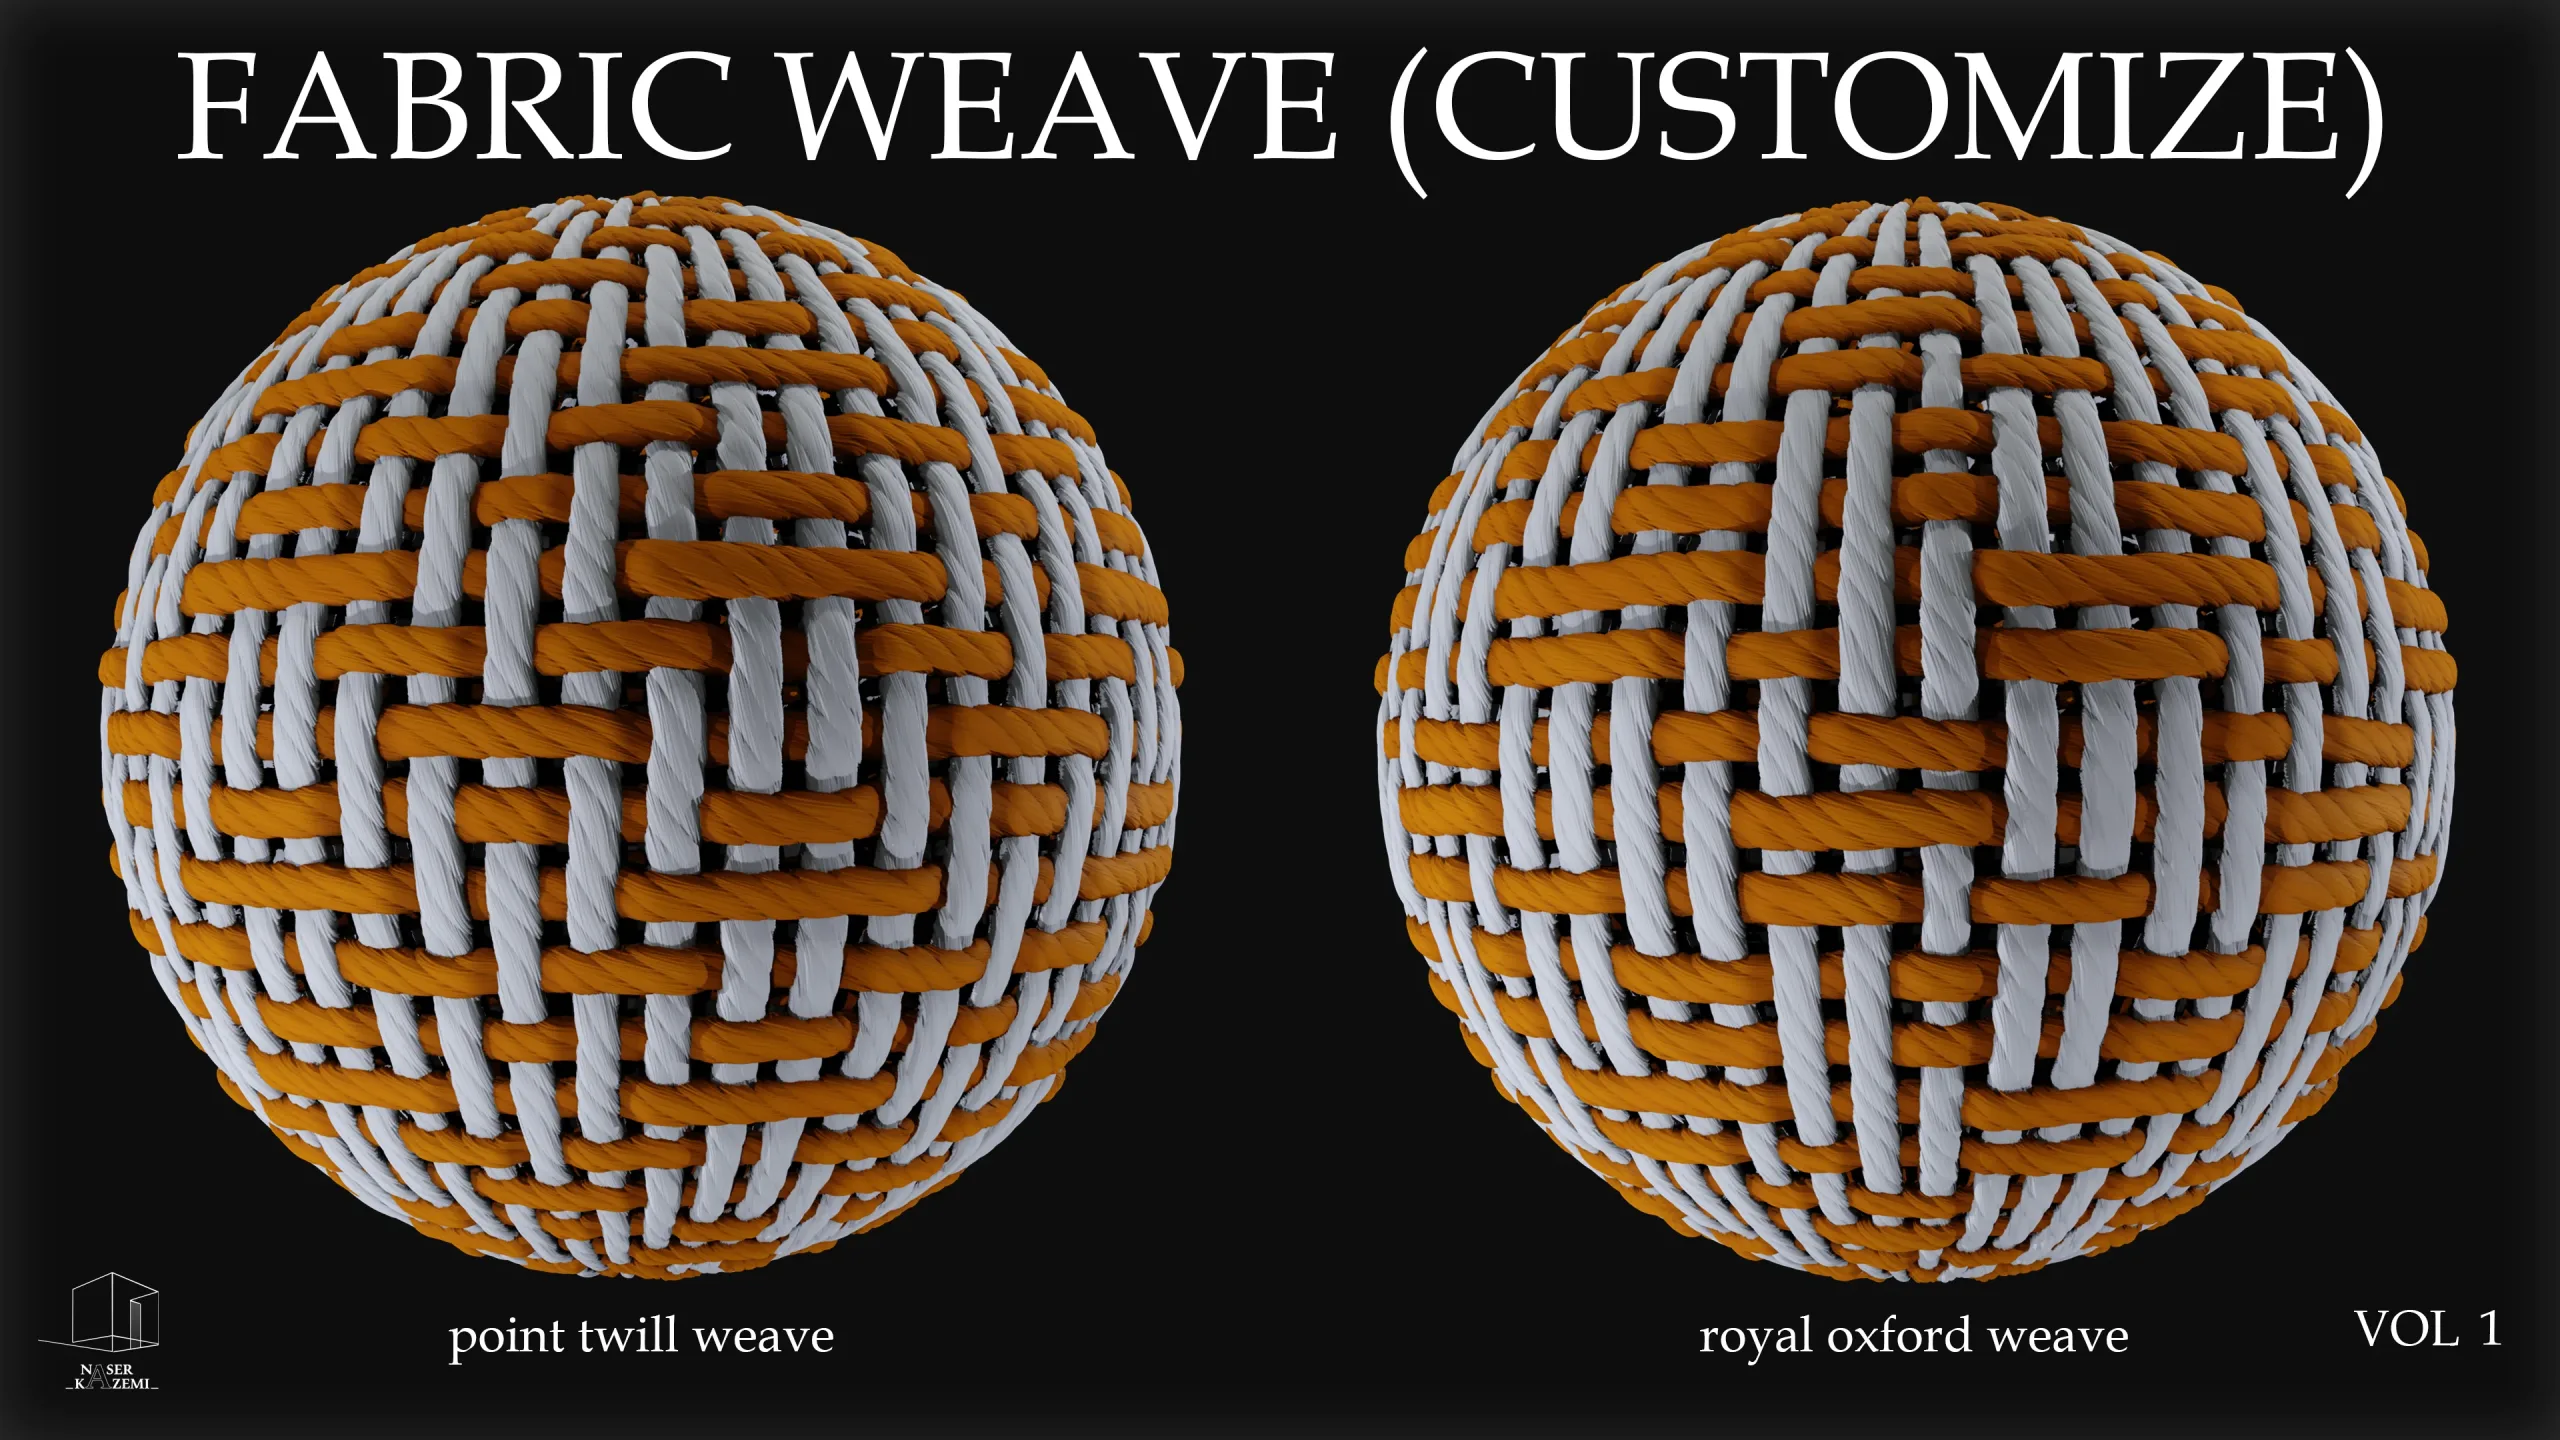 16 Fabric weave (customize)-vol 1